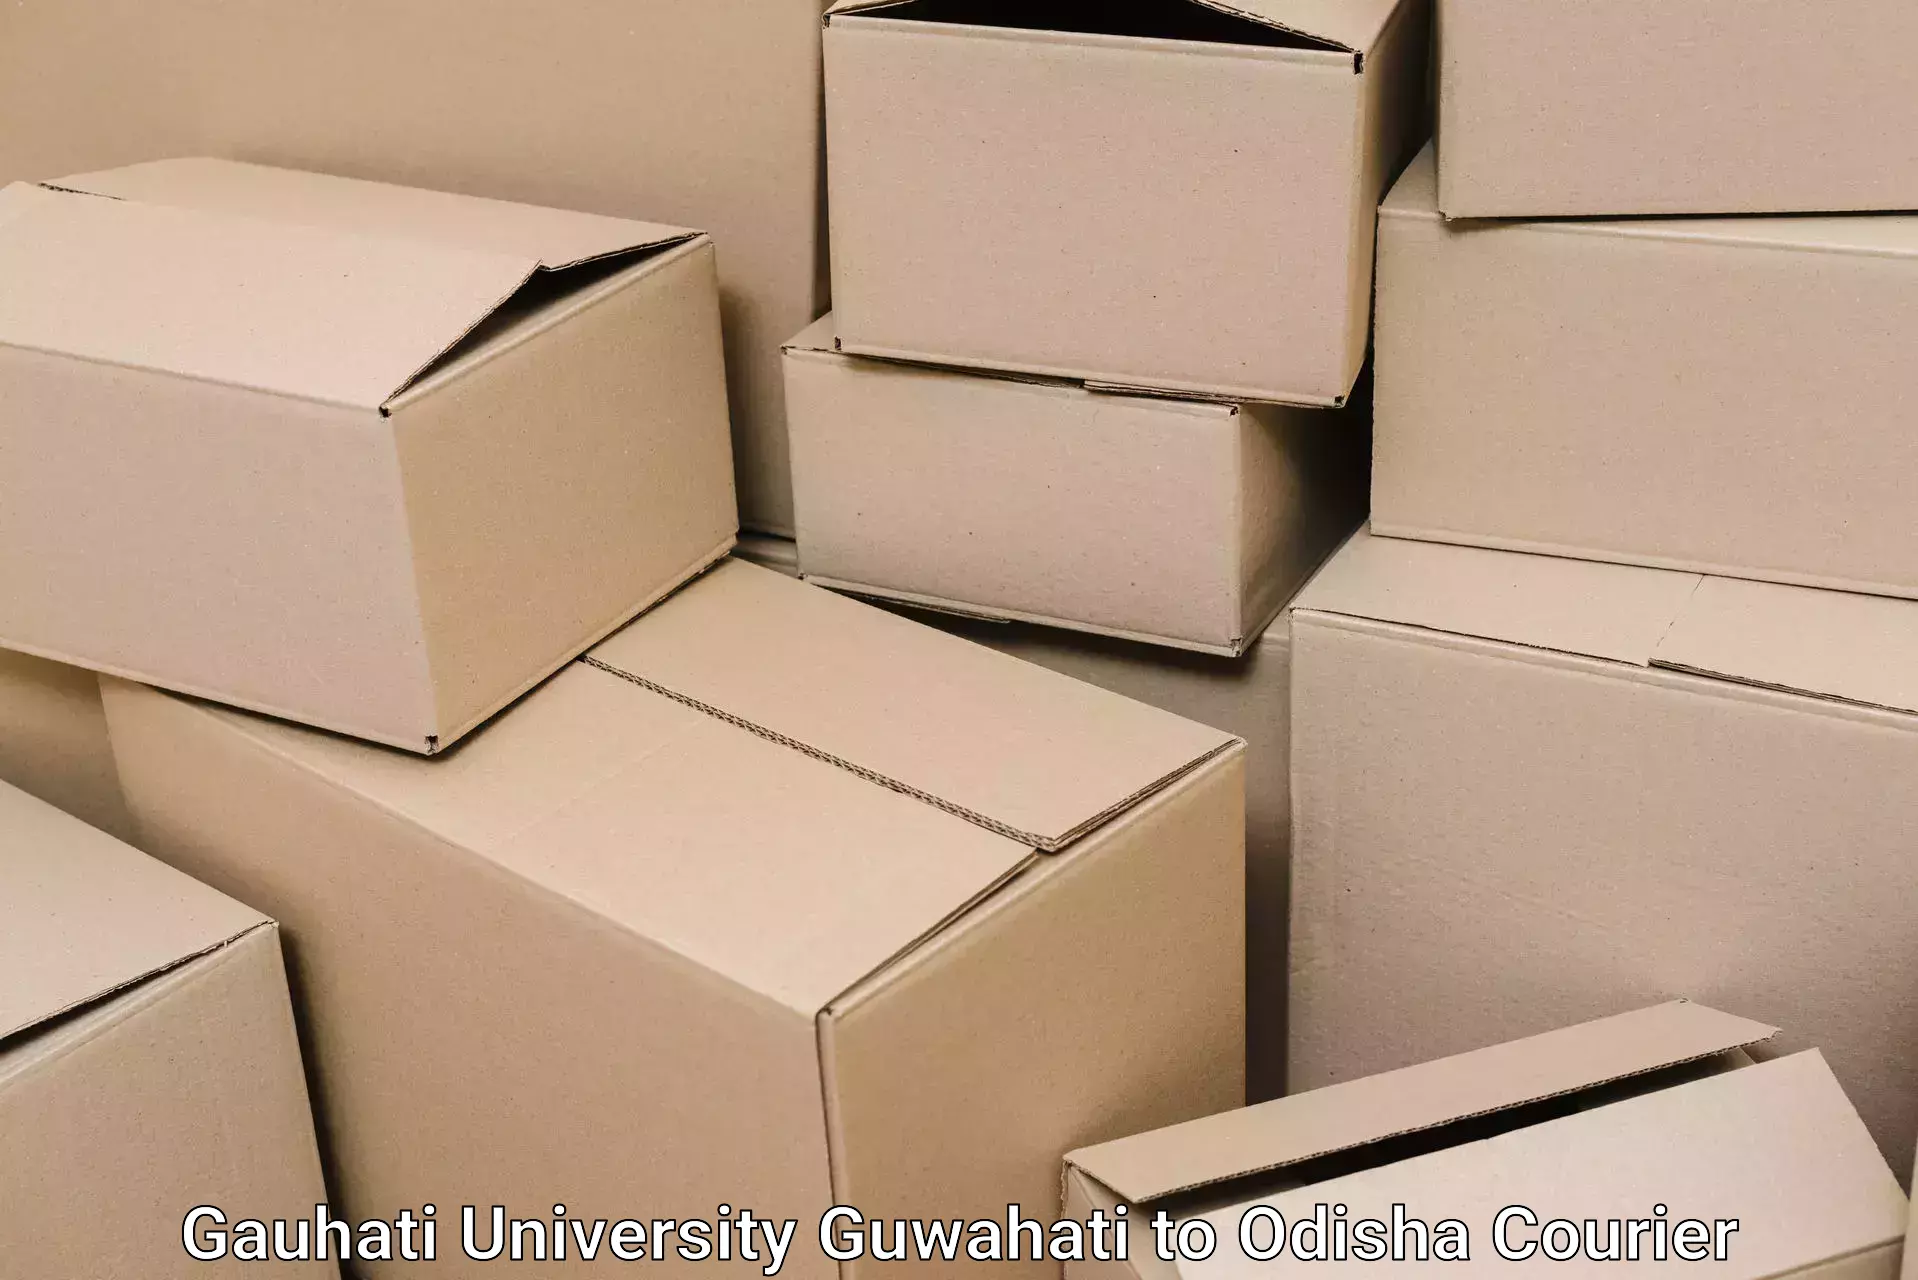 Furniture delivery service Gauhati University Guwahati to Gumadera